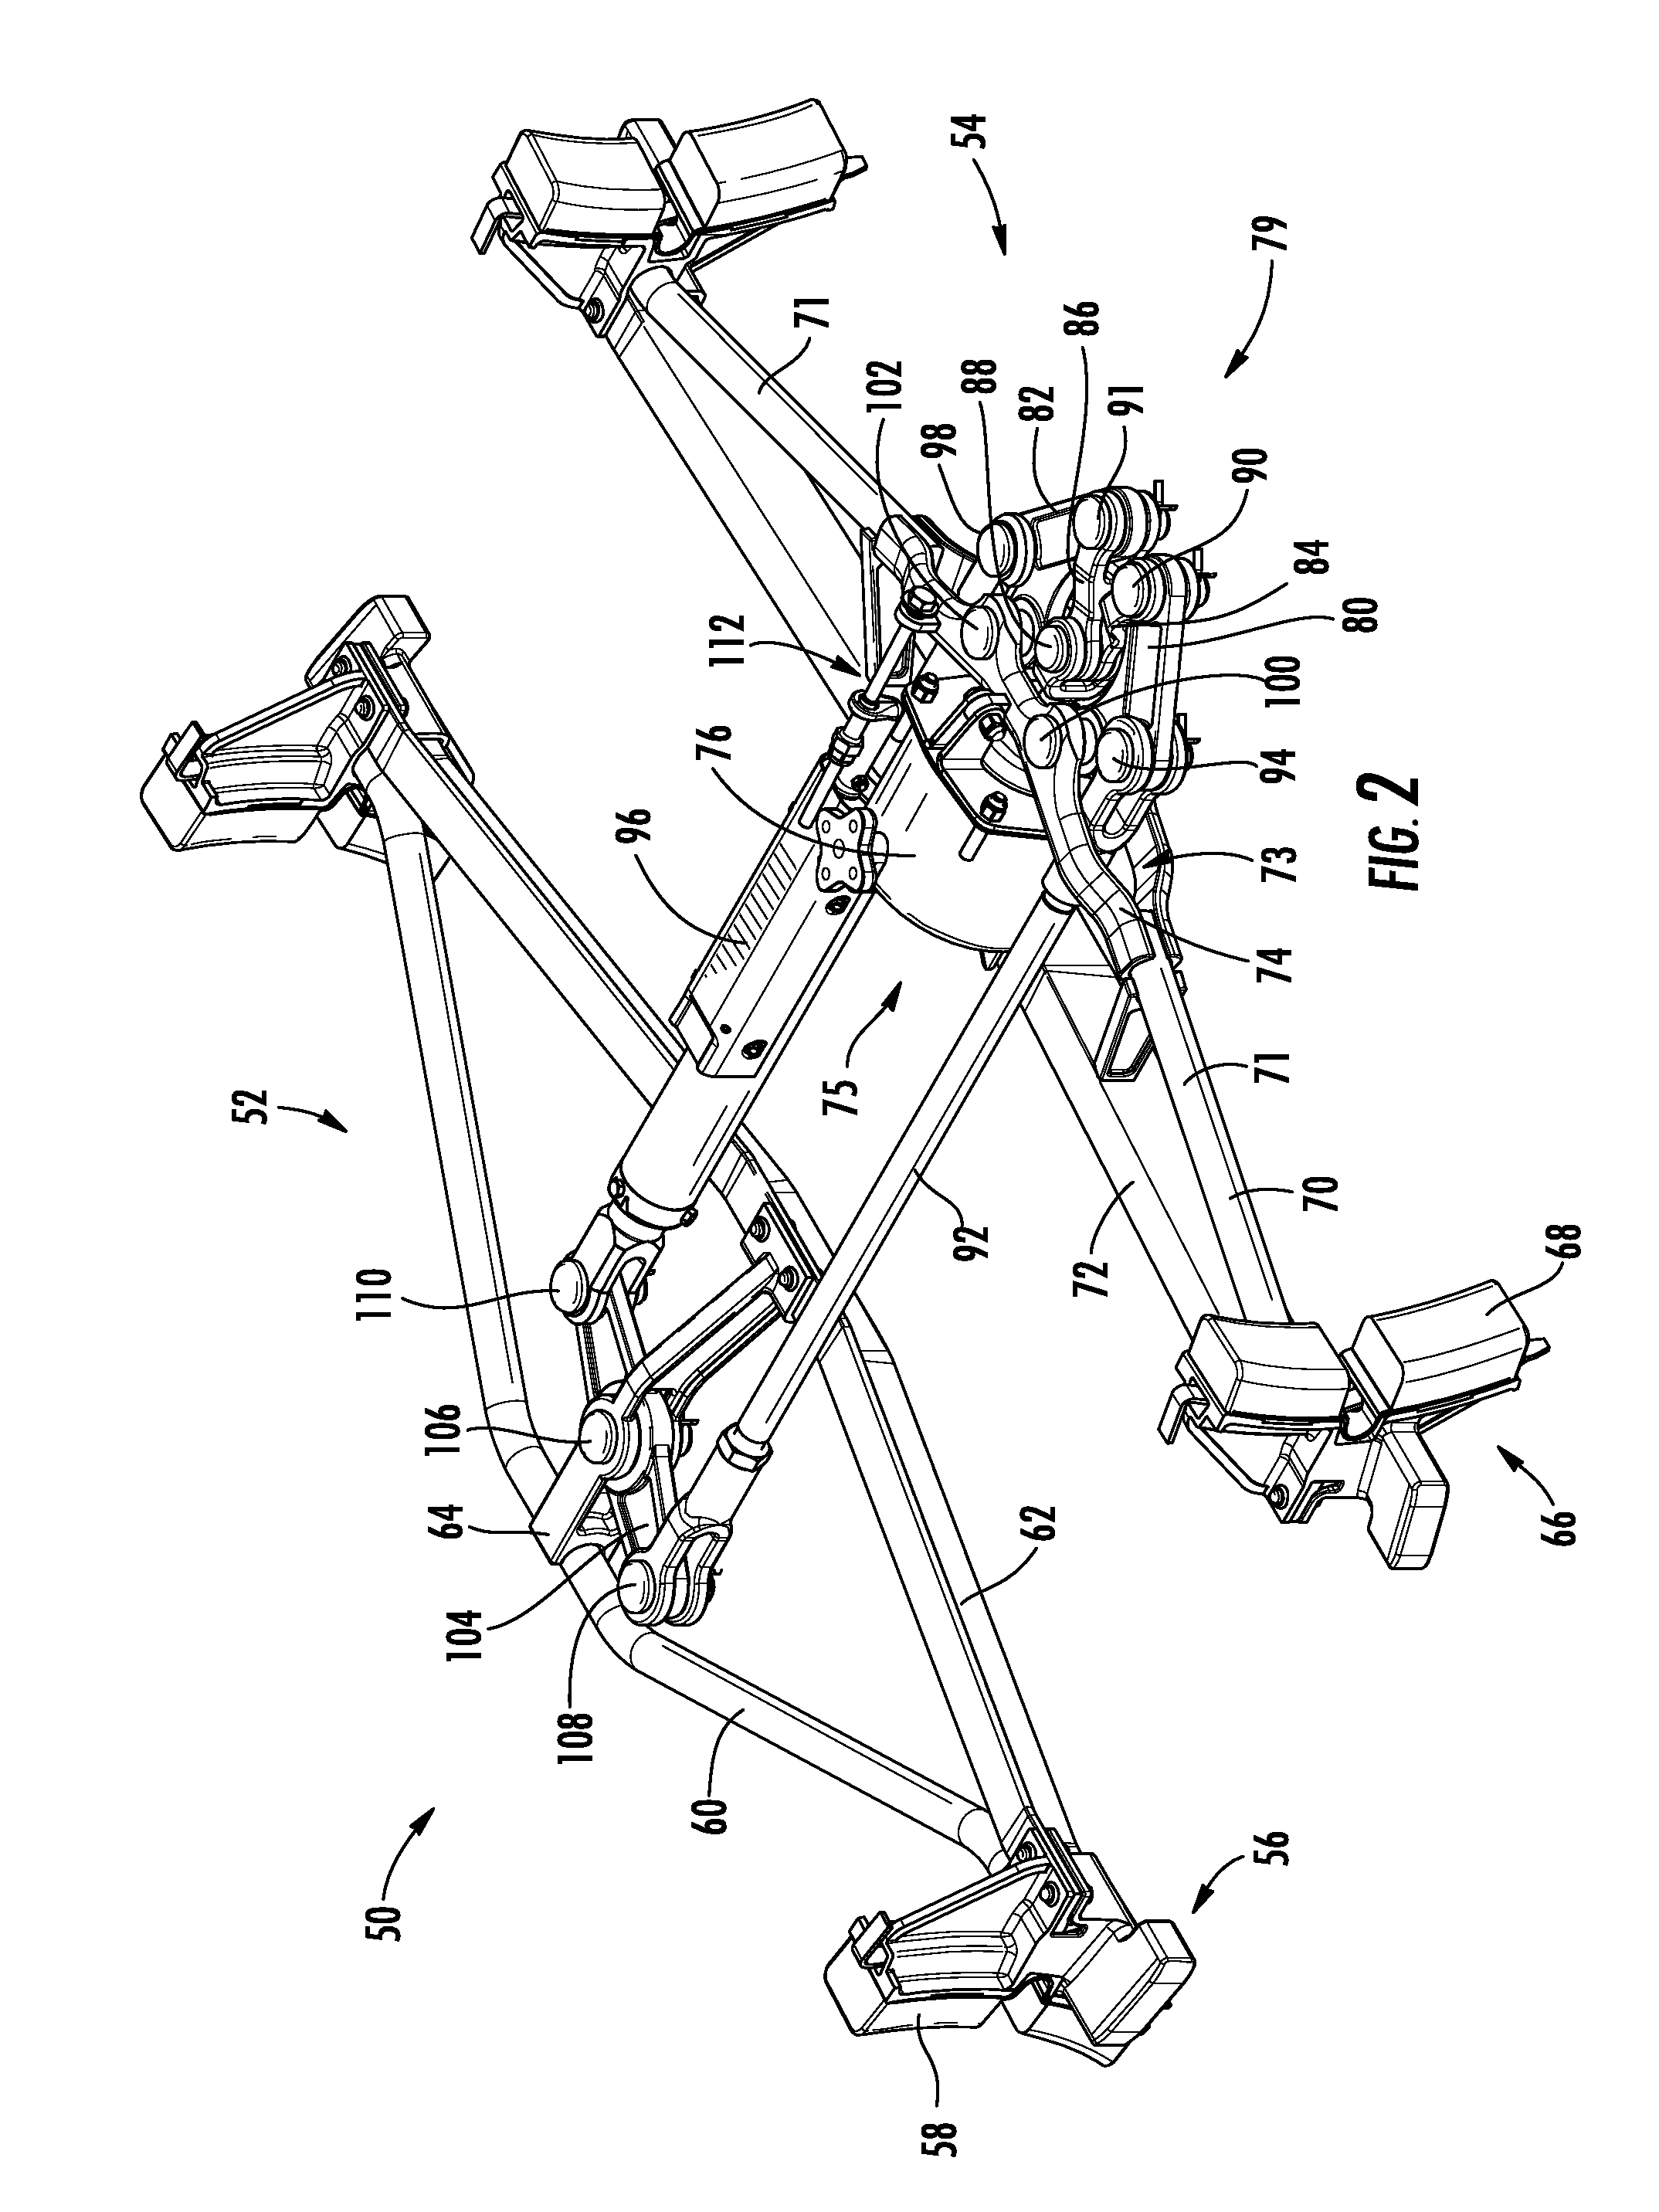 Braking system for a railway car